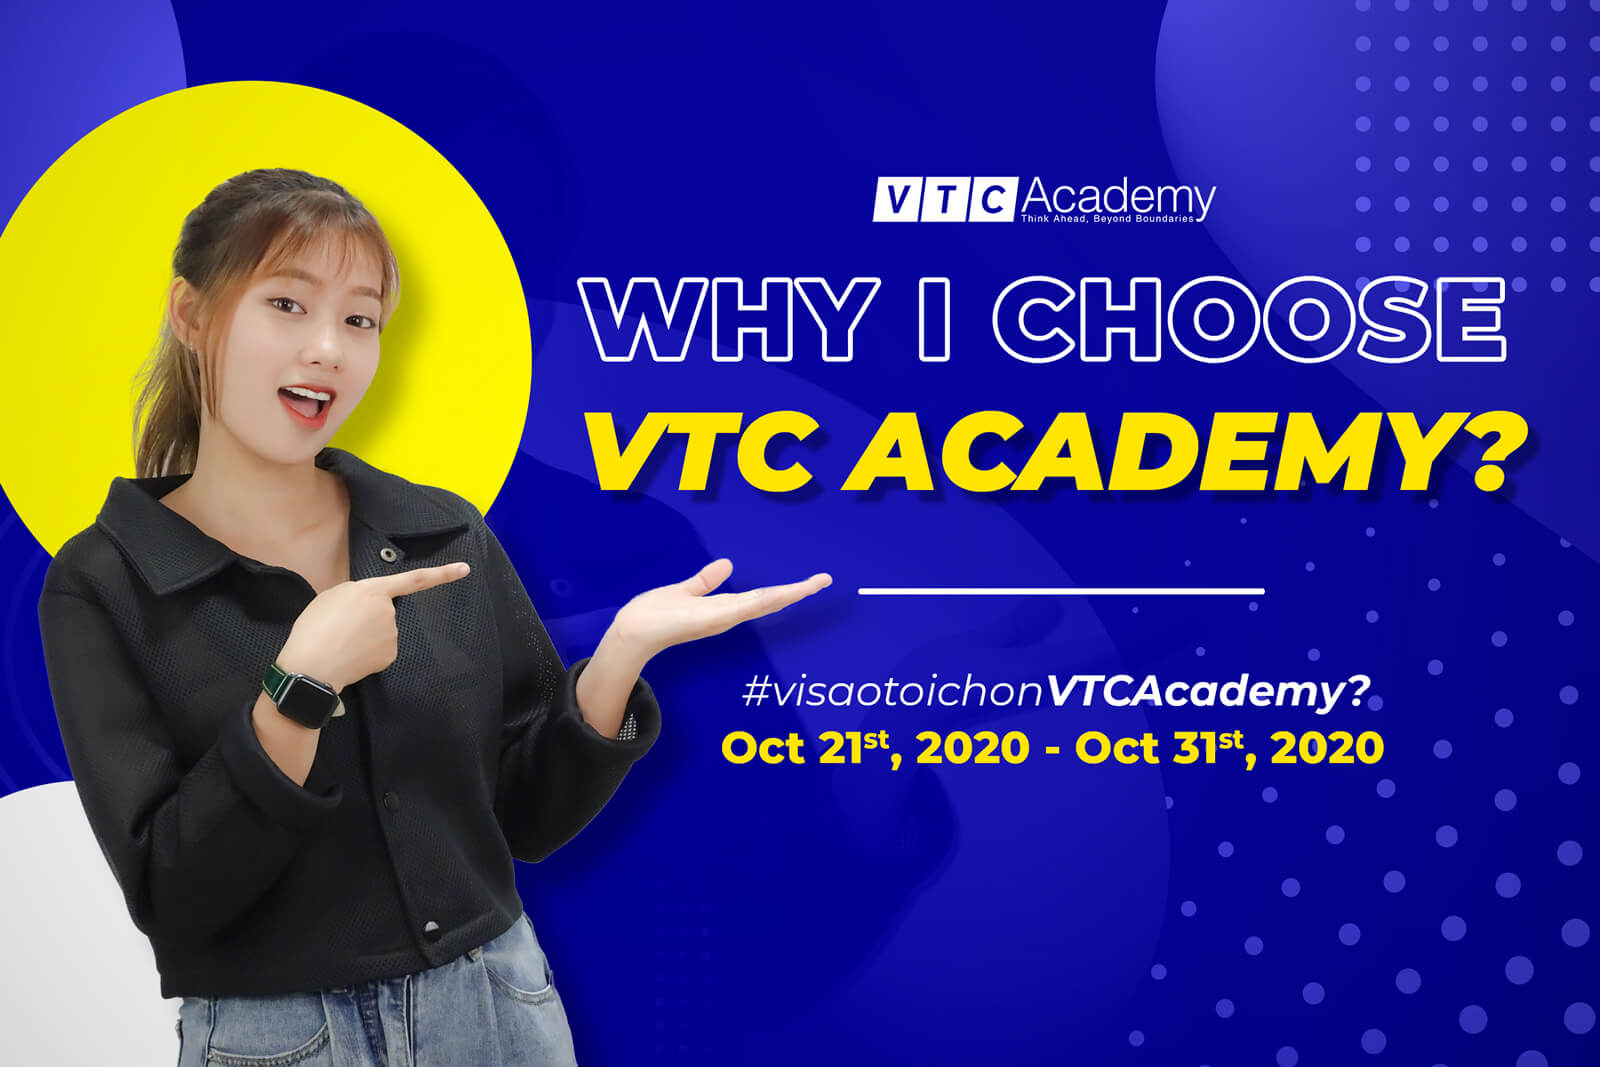 Have you ever wondered “Why do I choose VTC Academy?”